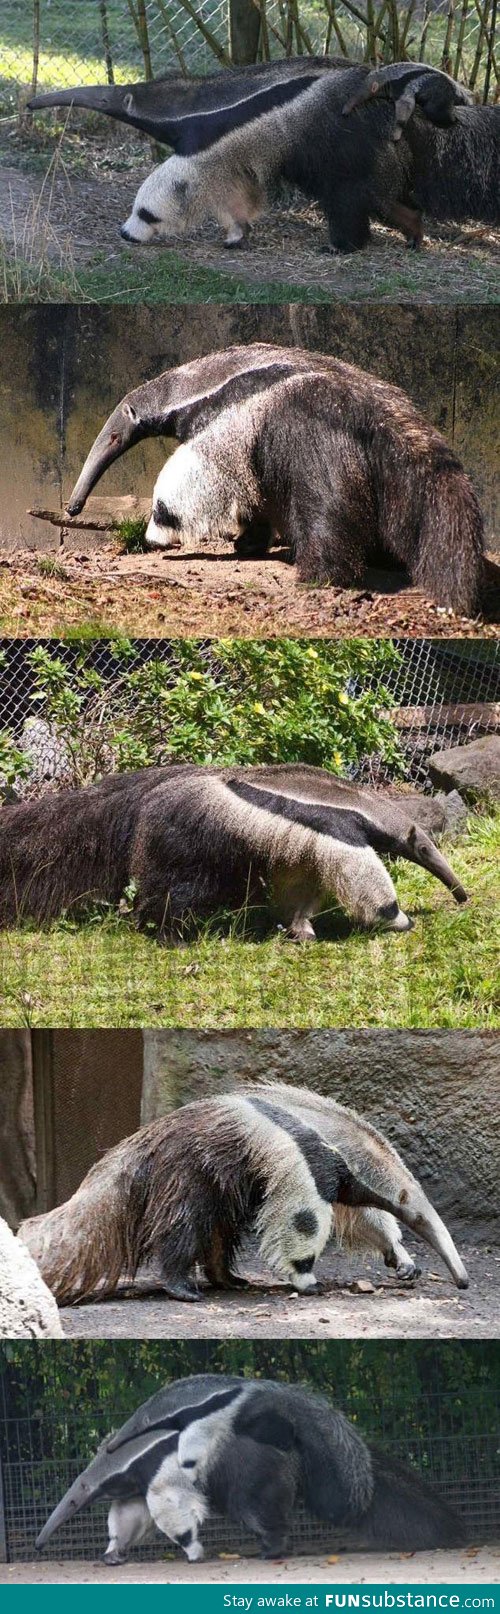 Giant anteater legs look like pandas